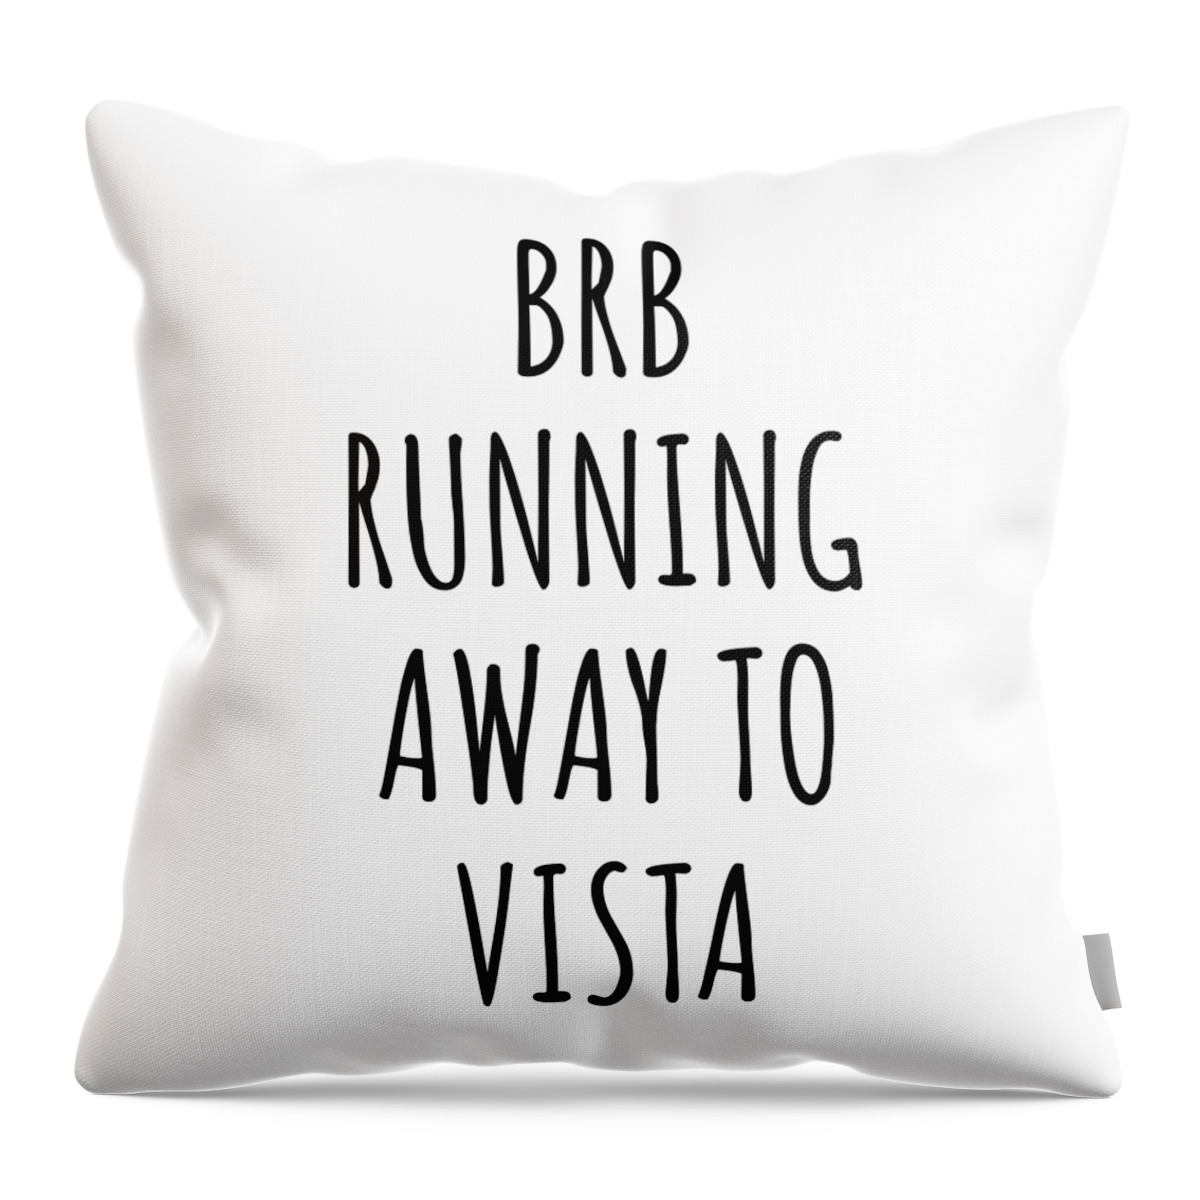 Vista Gift Throw Pillow featuring the digital art BRB Running Away To Vista by Jeff Creation